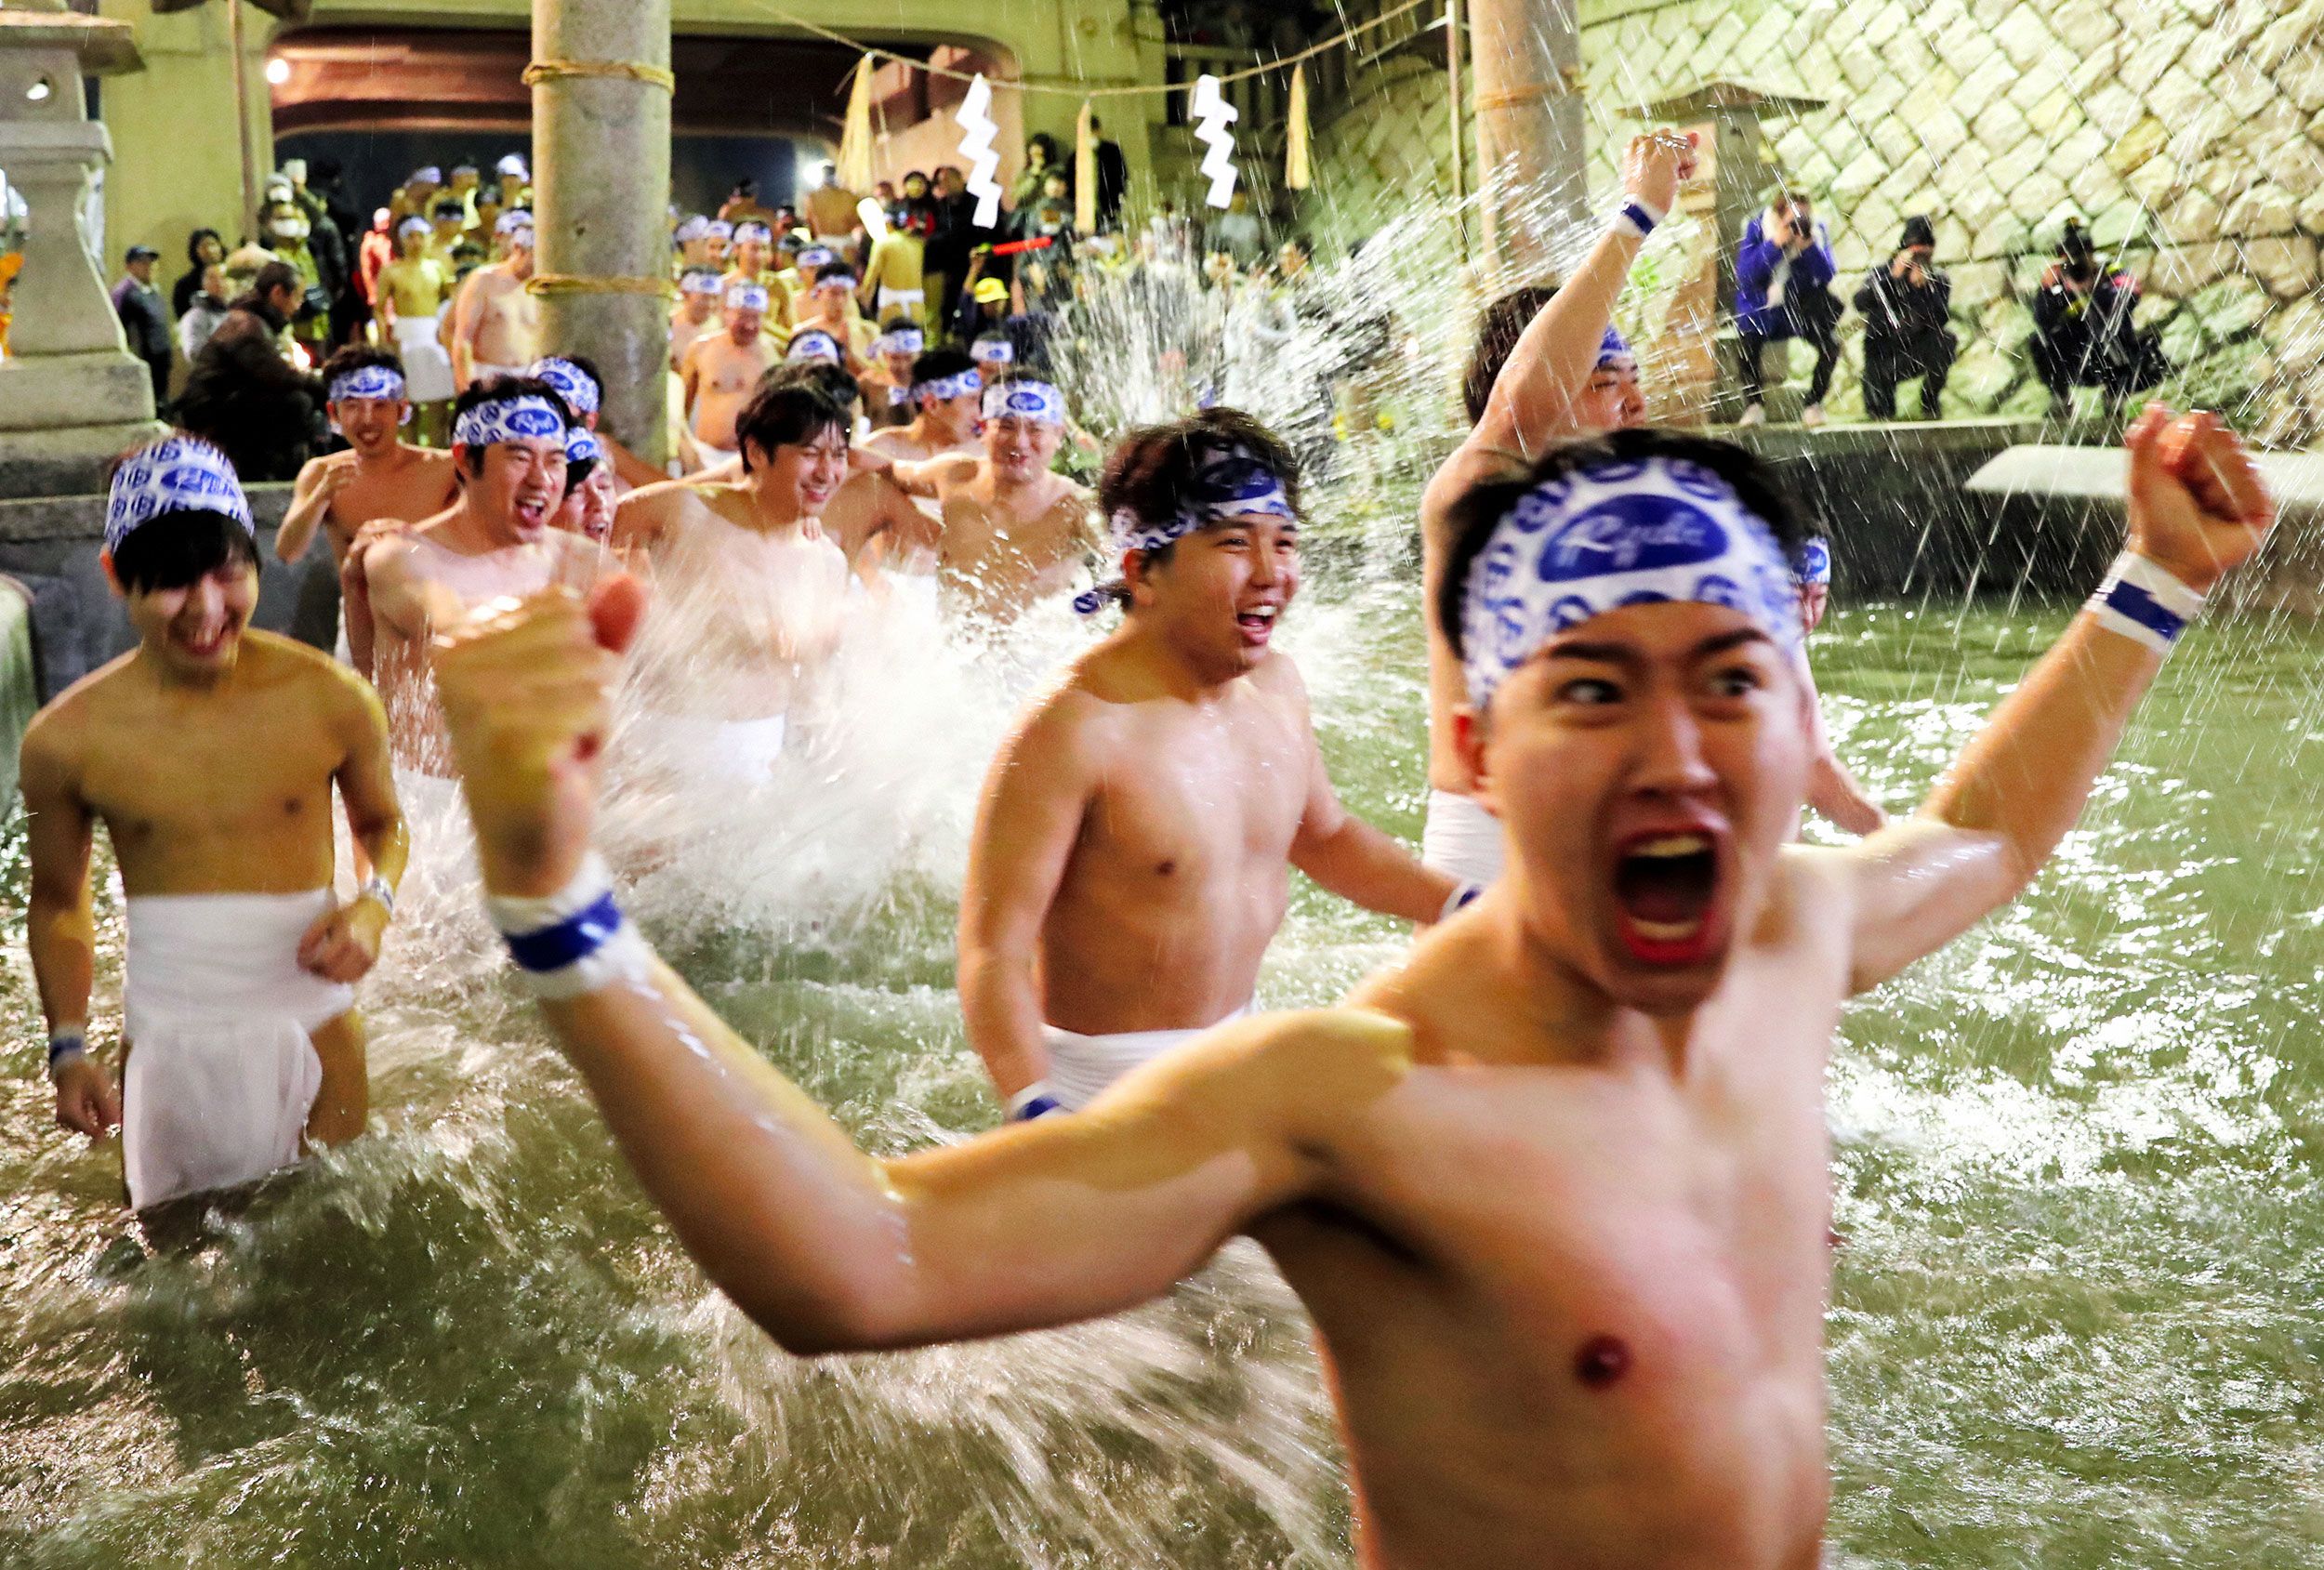 Japan Street Nude - Naked Festival: Thousands gather for Japan's annual 'Hadaka Matsuri' | CNN